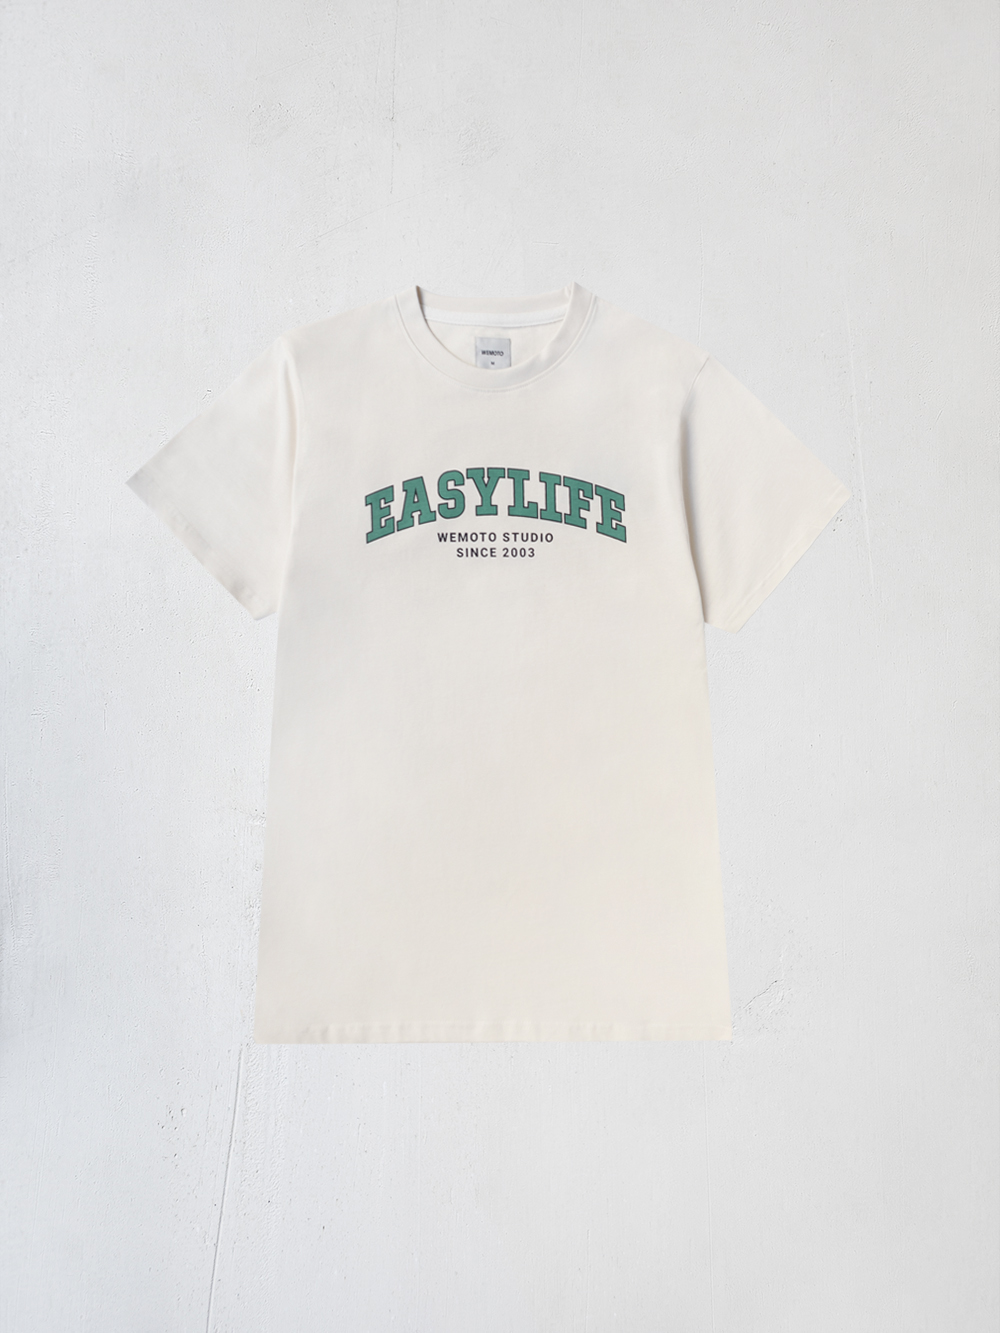 easylife t shirt